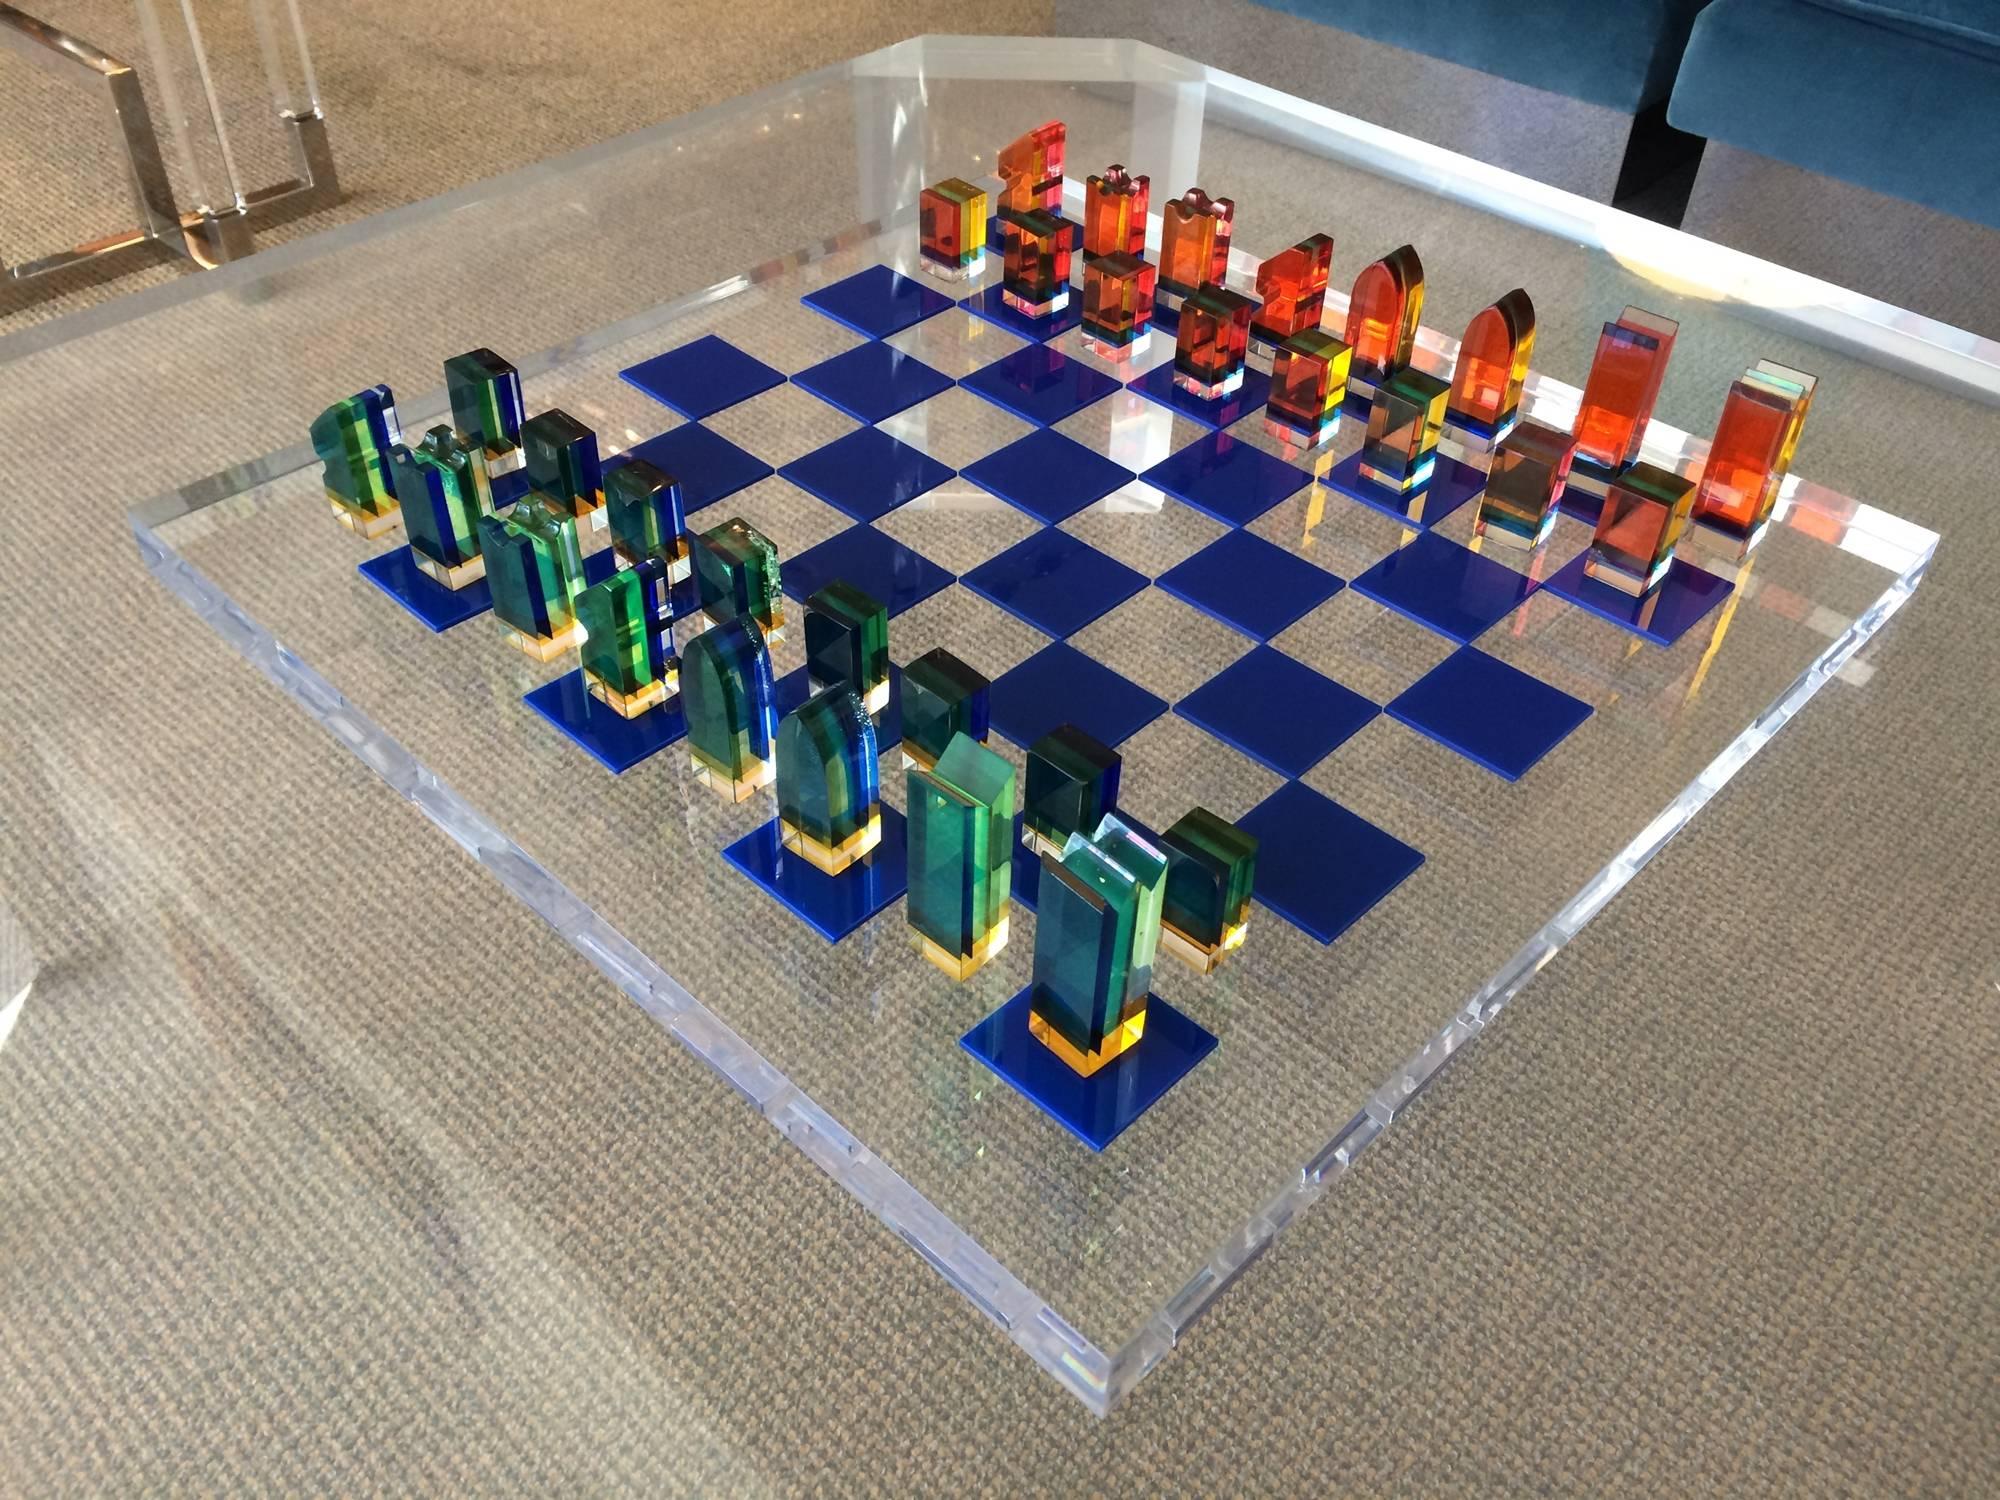 joey jones chess set